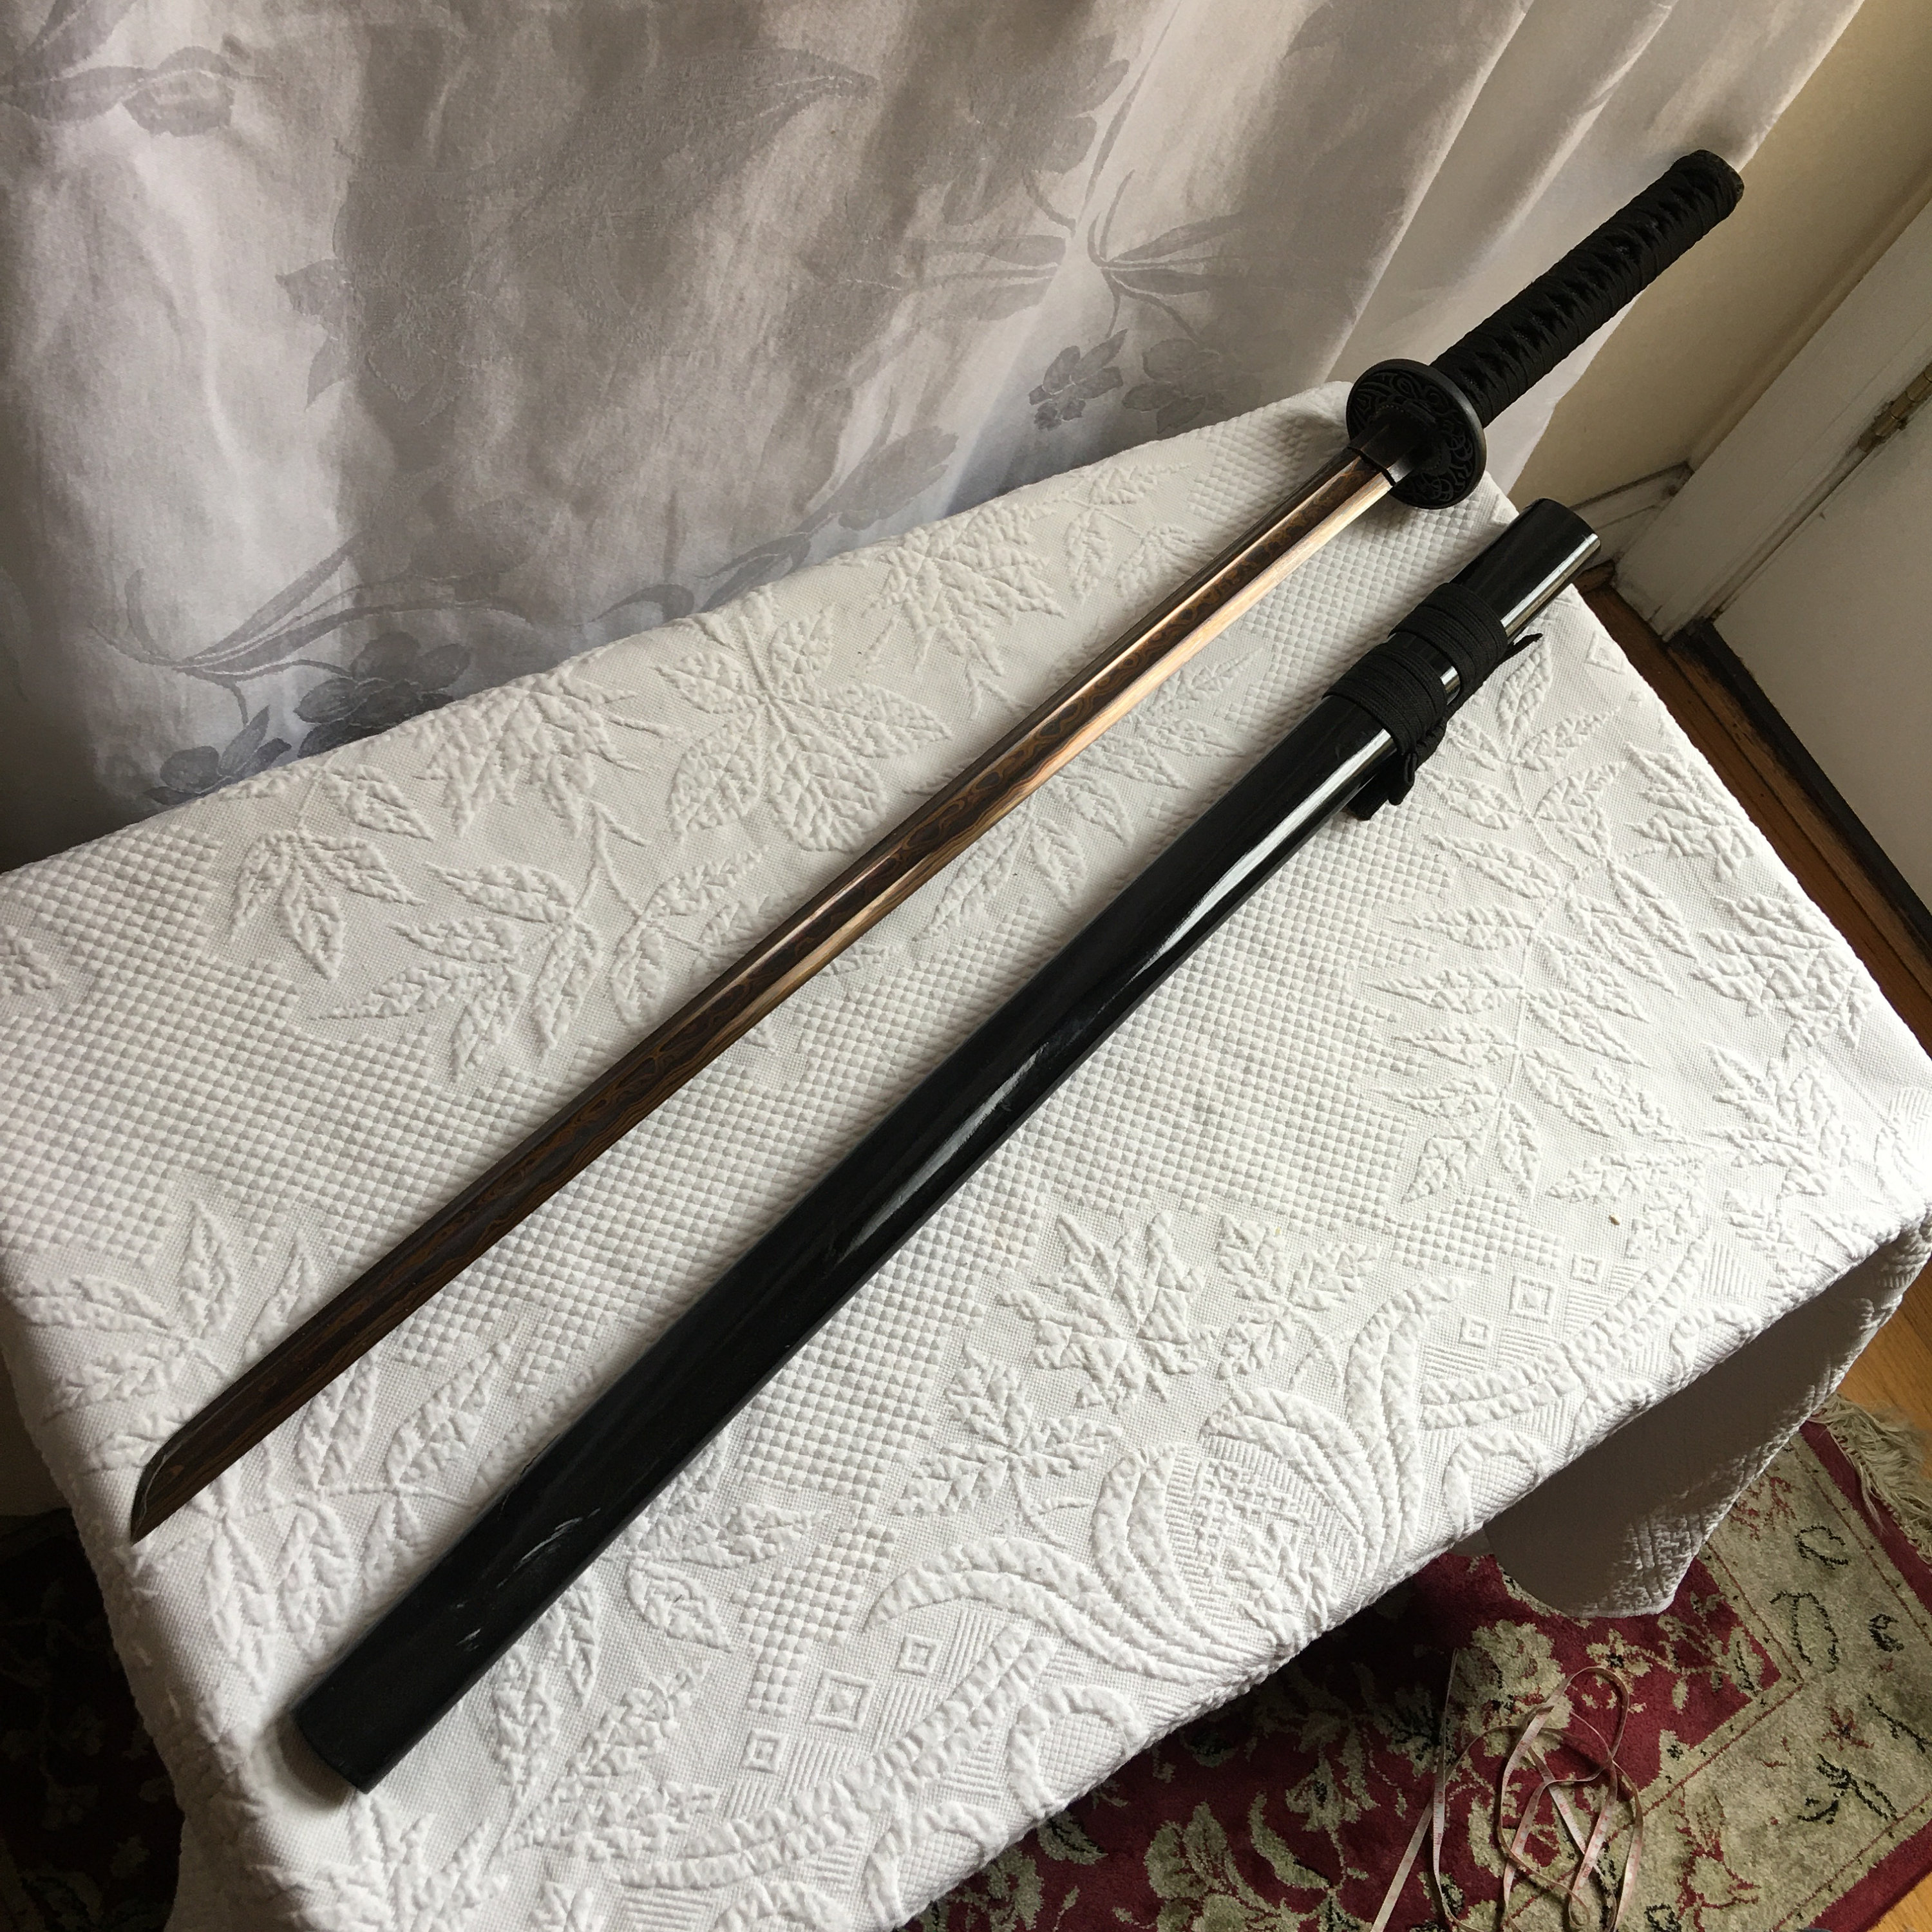 Sturdy Pinewood Sword With Handle Wrap and Belt/Sheath